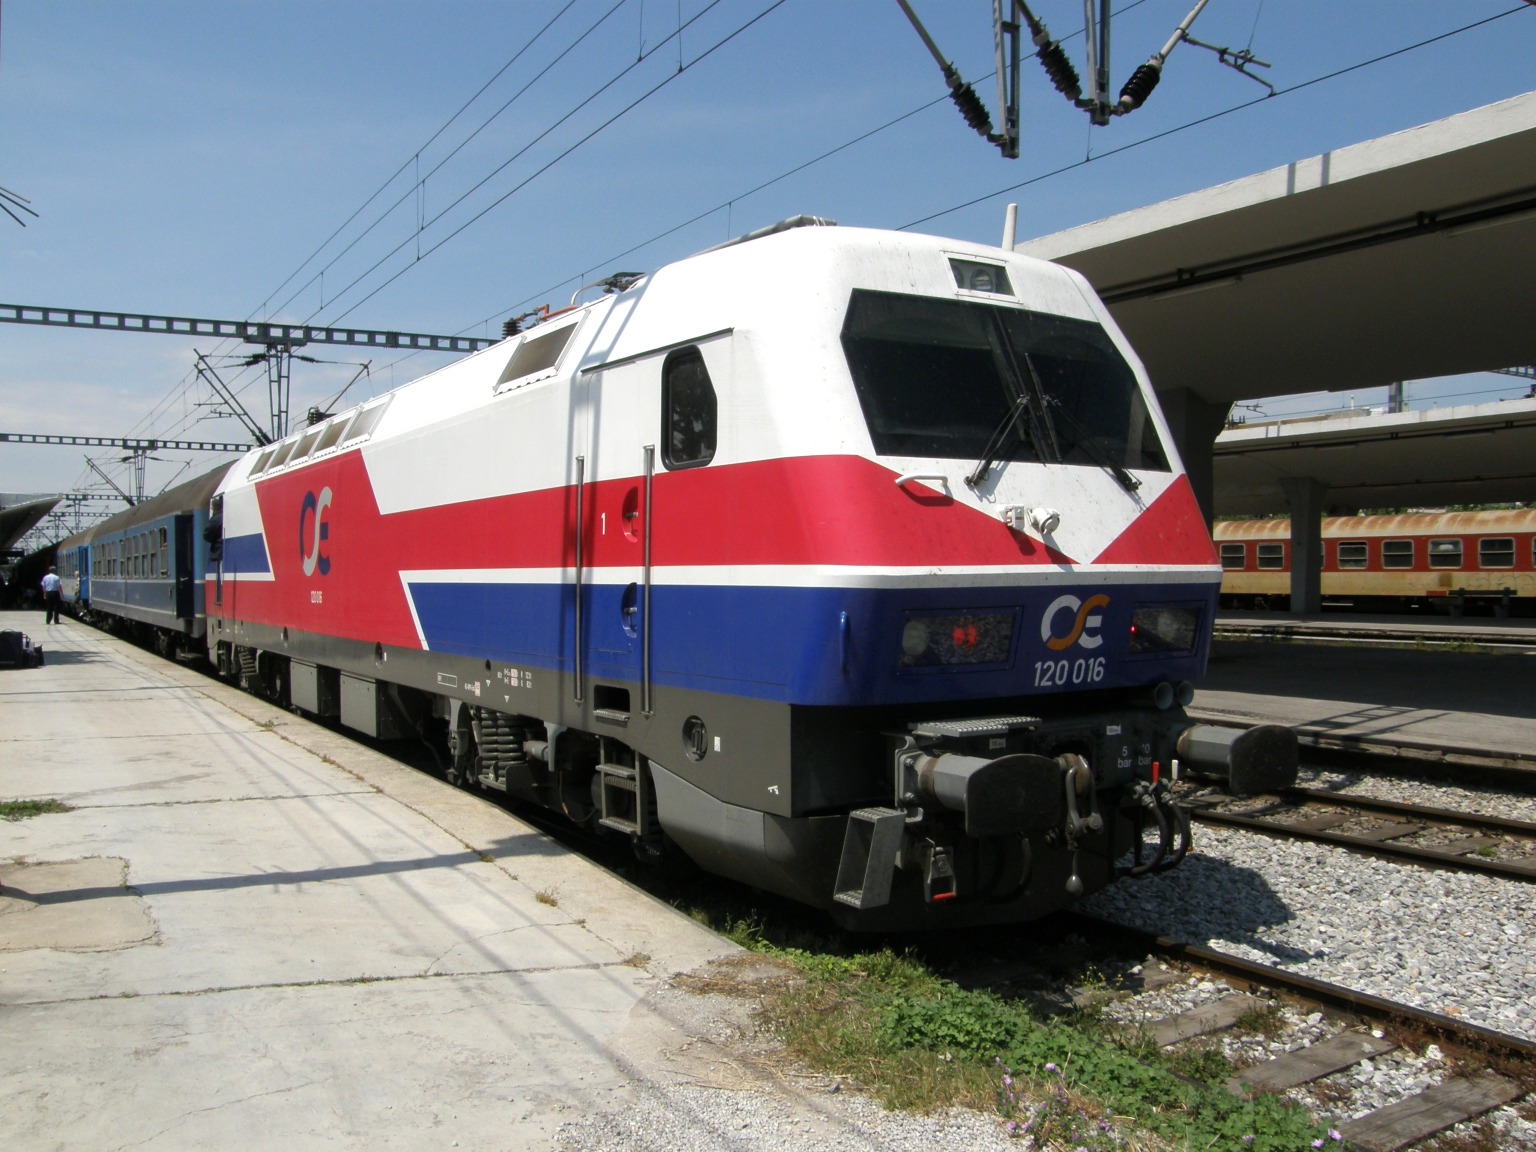 More information about "Αρχές Ιουλίου η ΤΡΑΙΝΟΣΕ περνάει στην ιταλική Ferrovie"